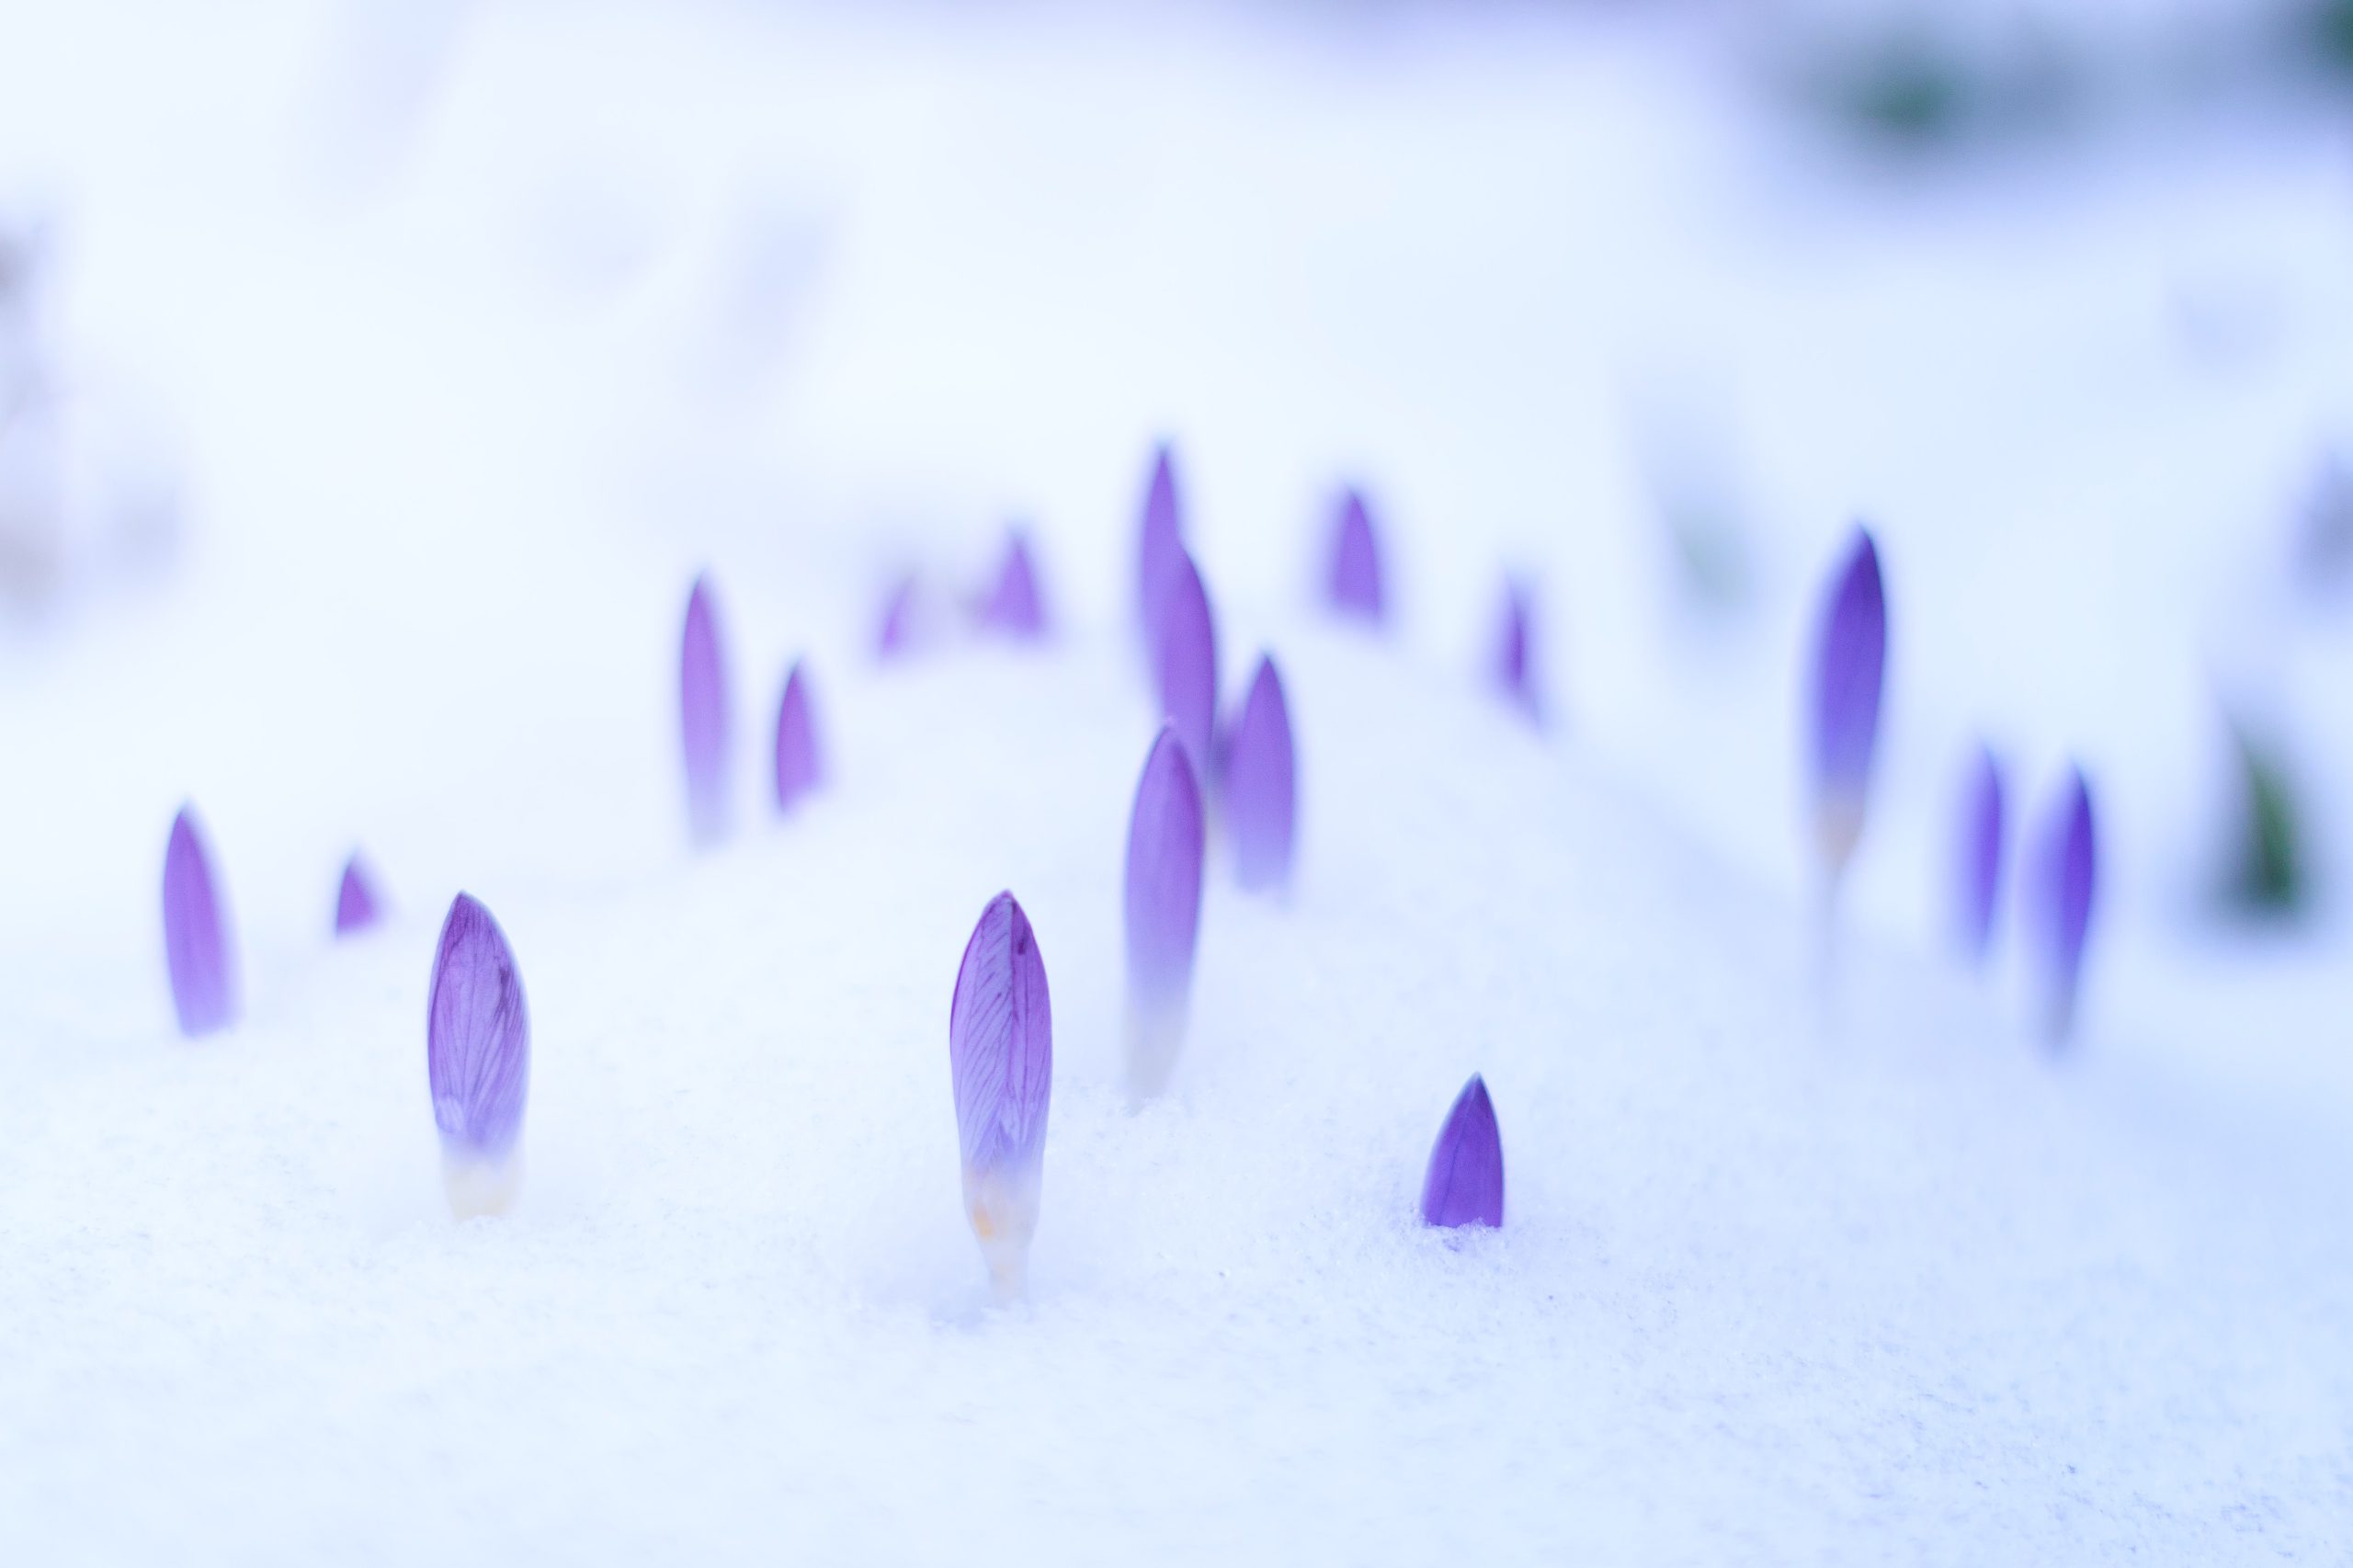 Flowers poking through the snow | Photo by Johannes Plenio on Unsplash